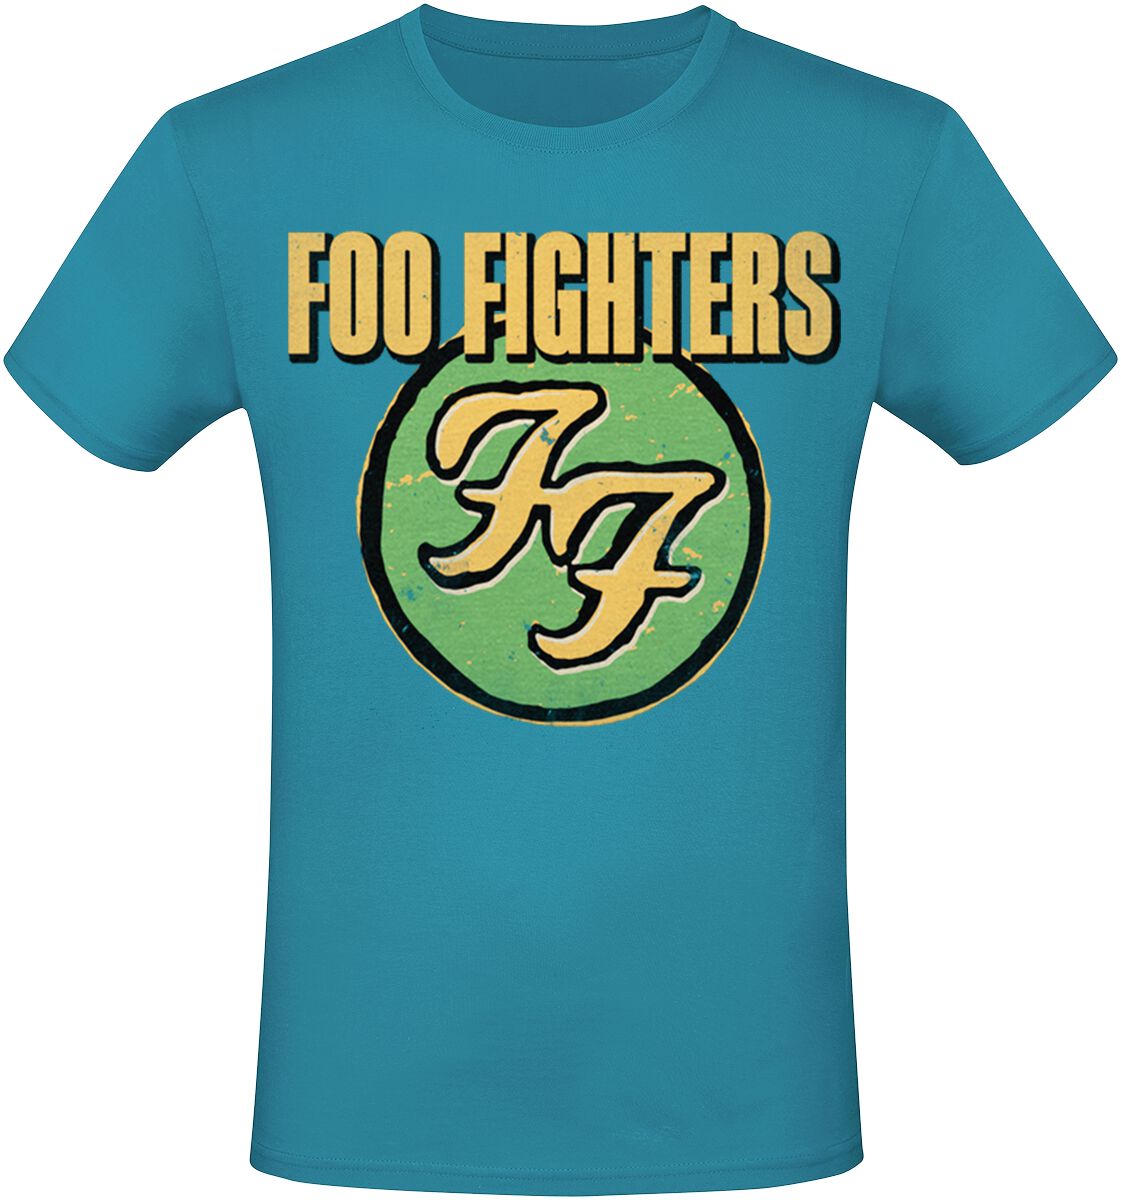 Foo Fighters Logo T-Shirt blau in XL